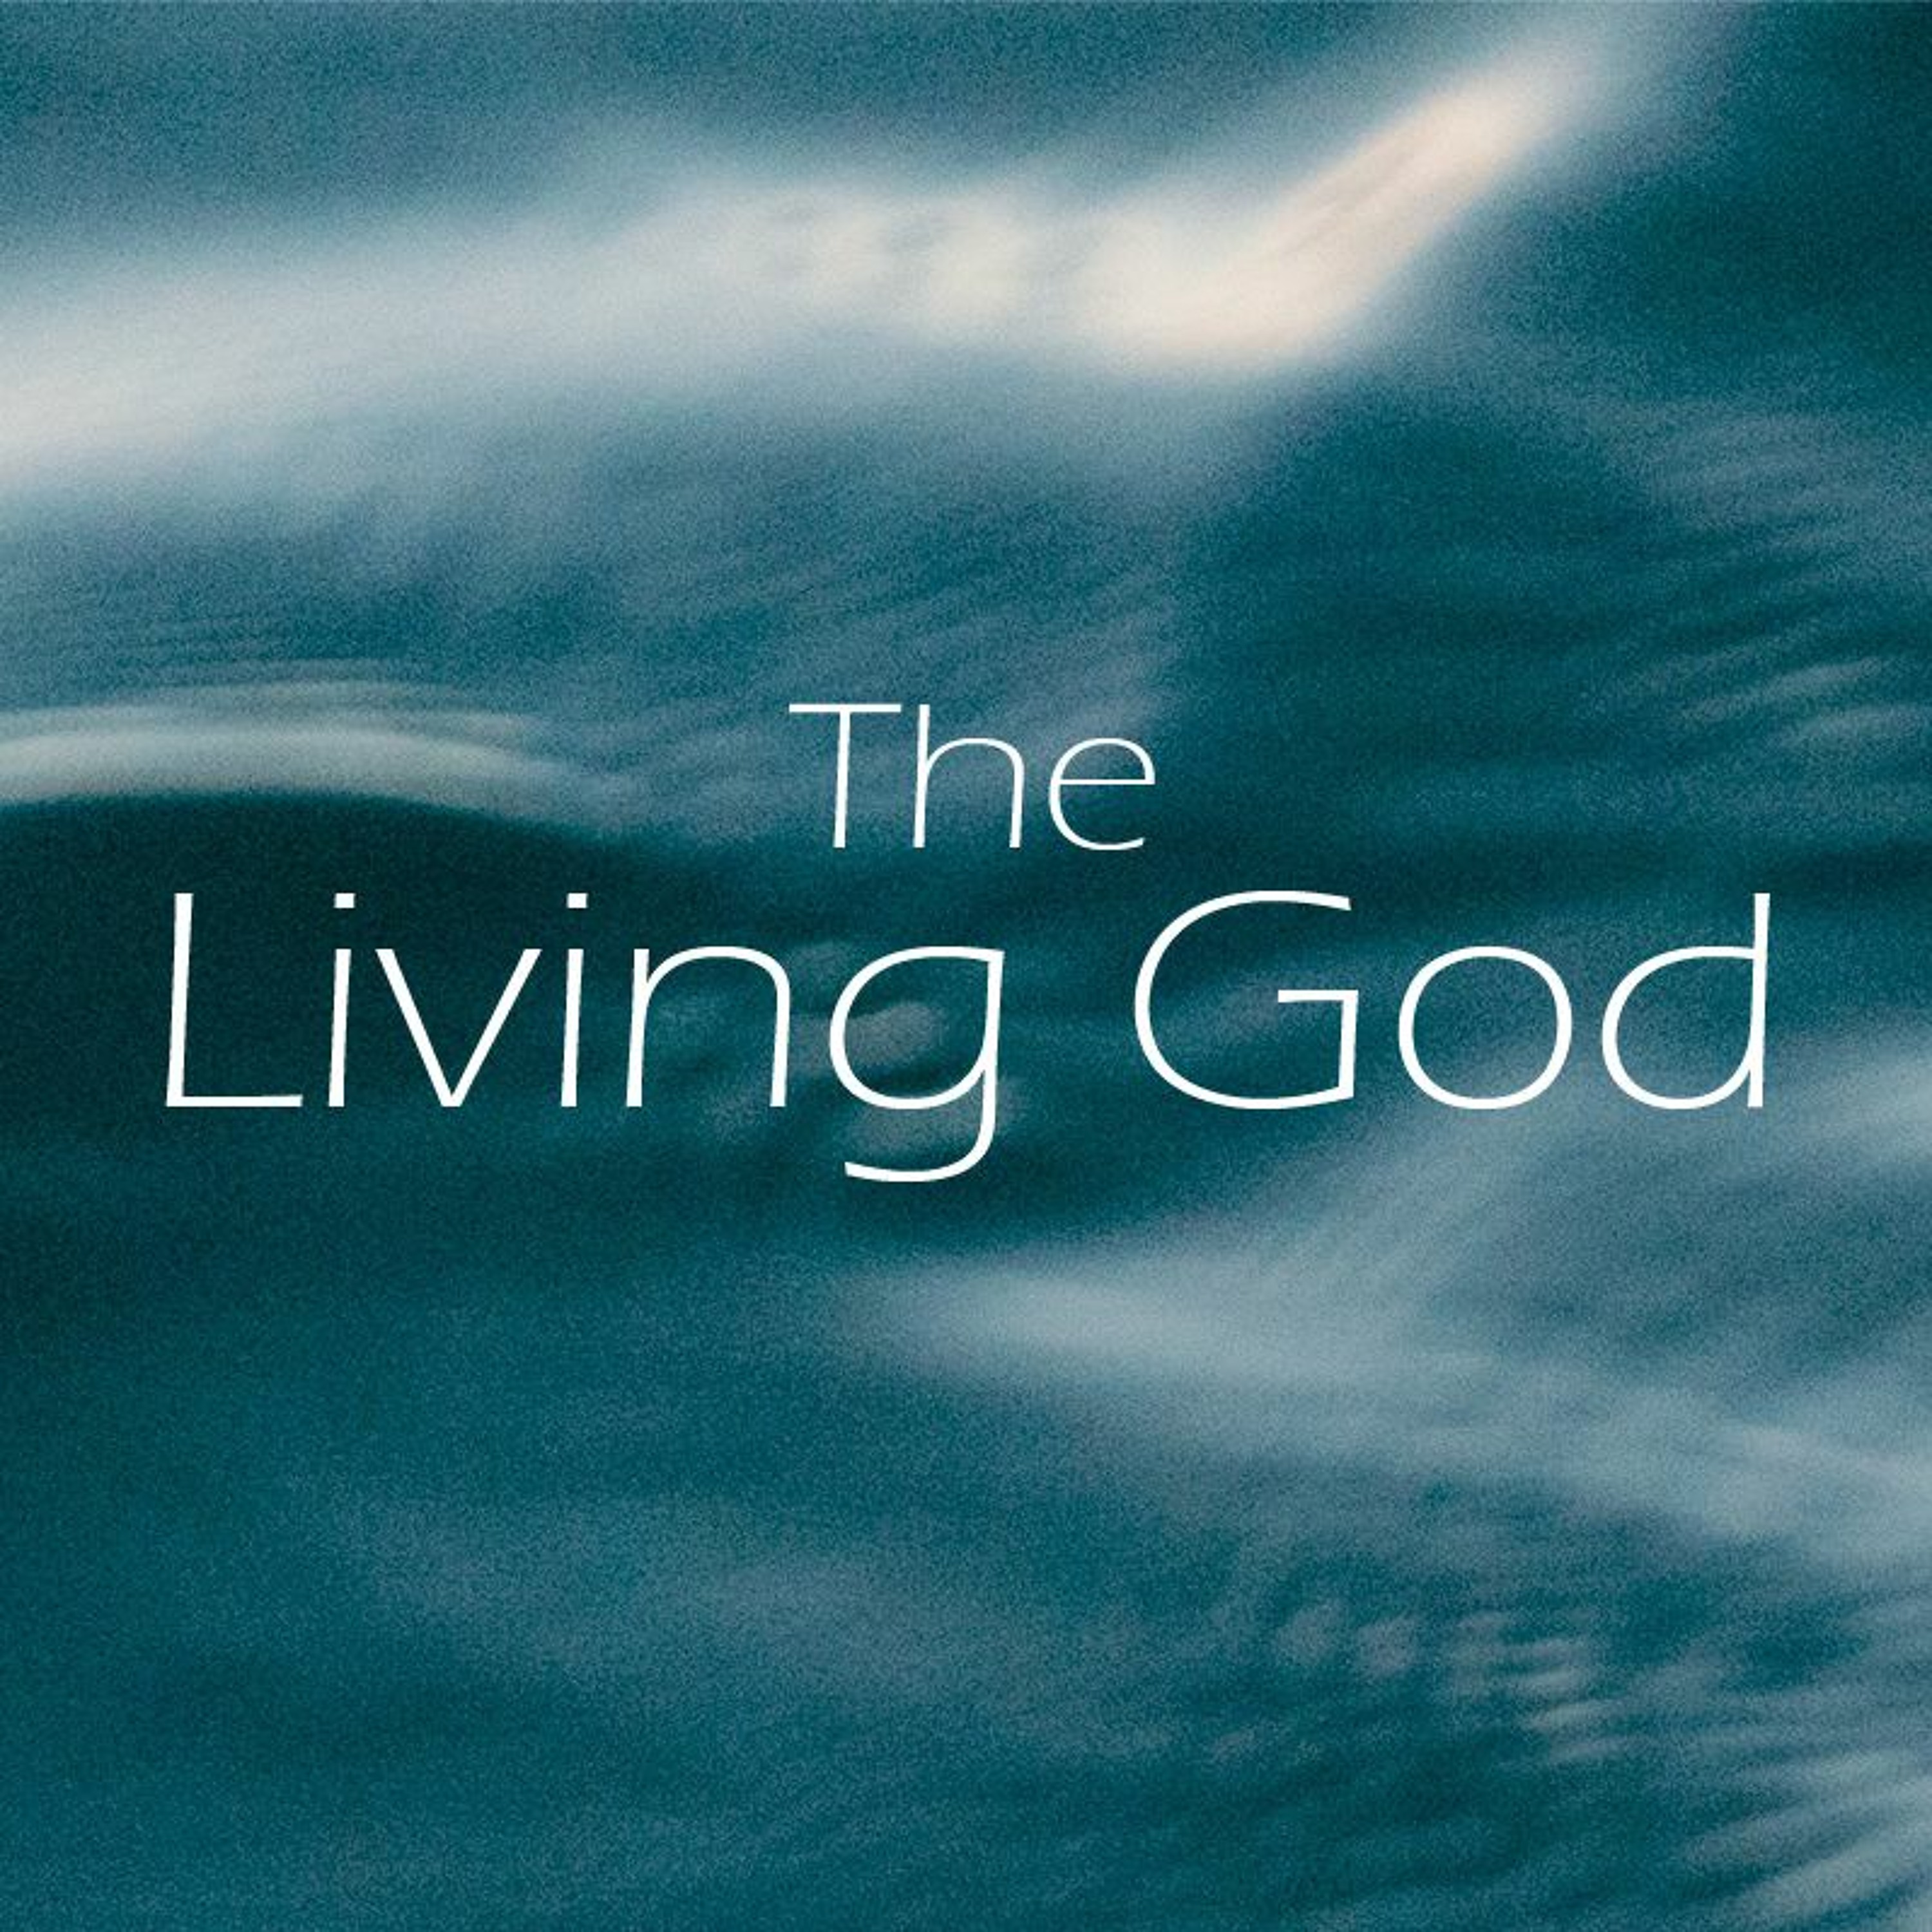 The Living God | Provides